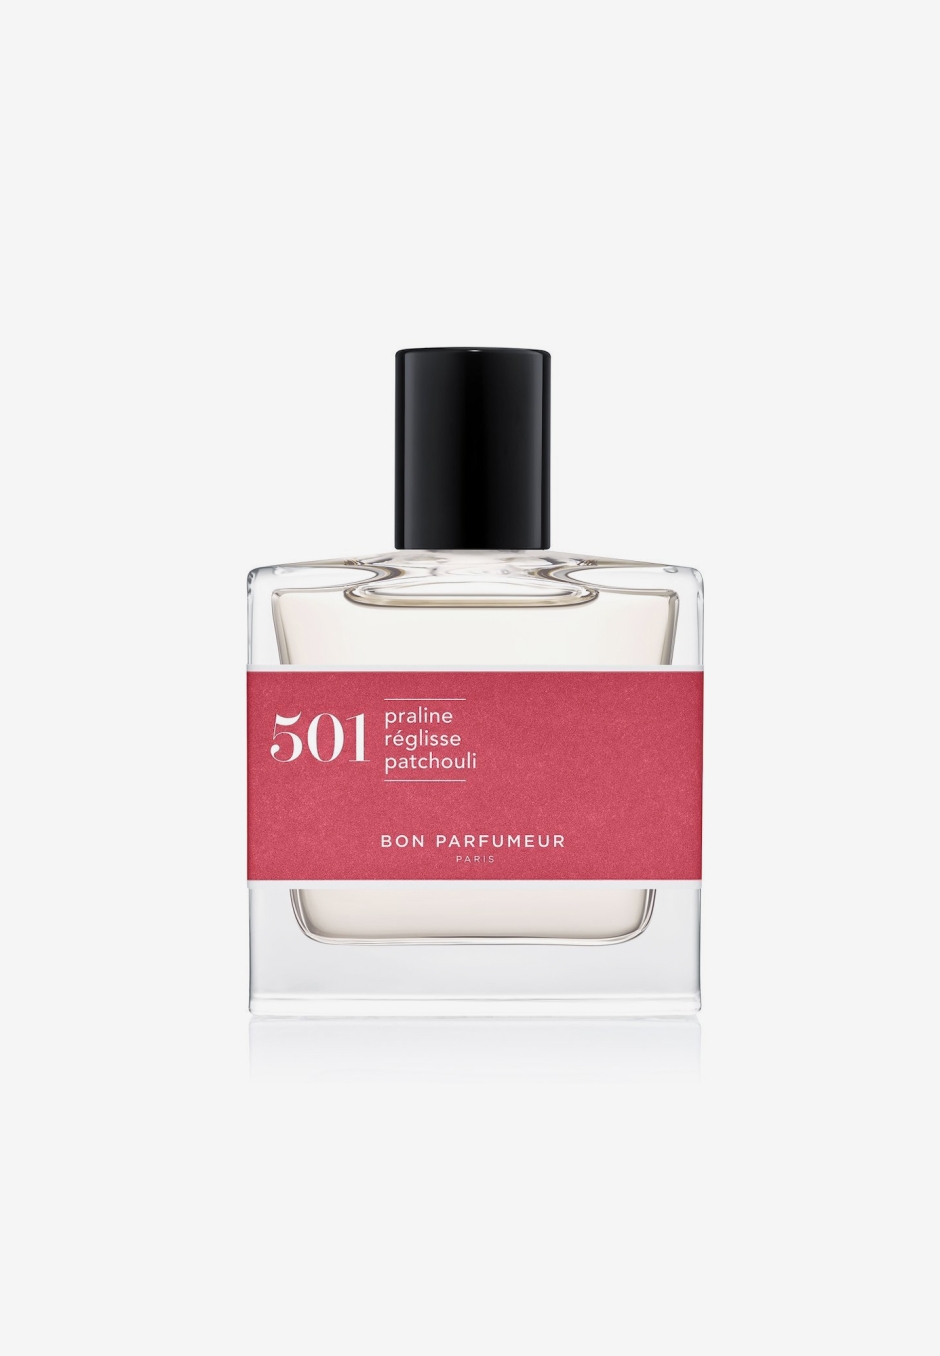 Bon Parfumeur EdP 501: praline, licorice, patchouli 30 ml